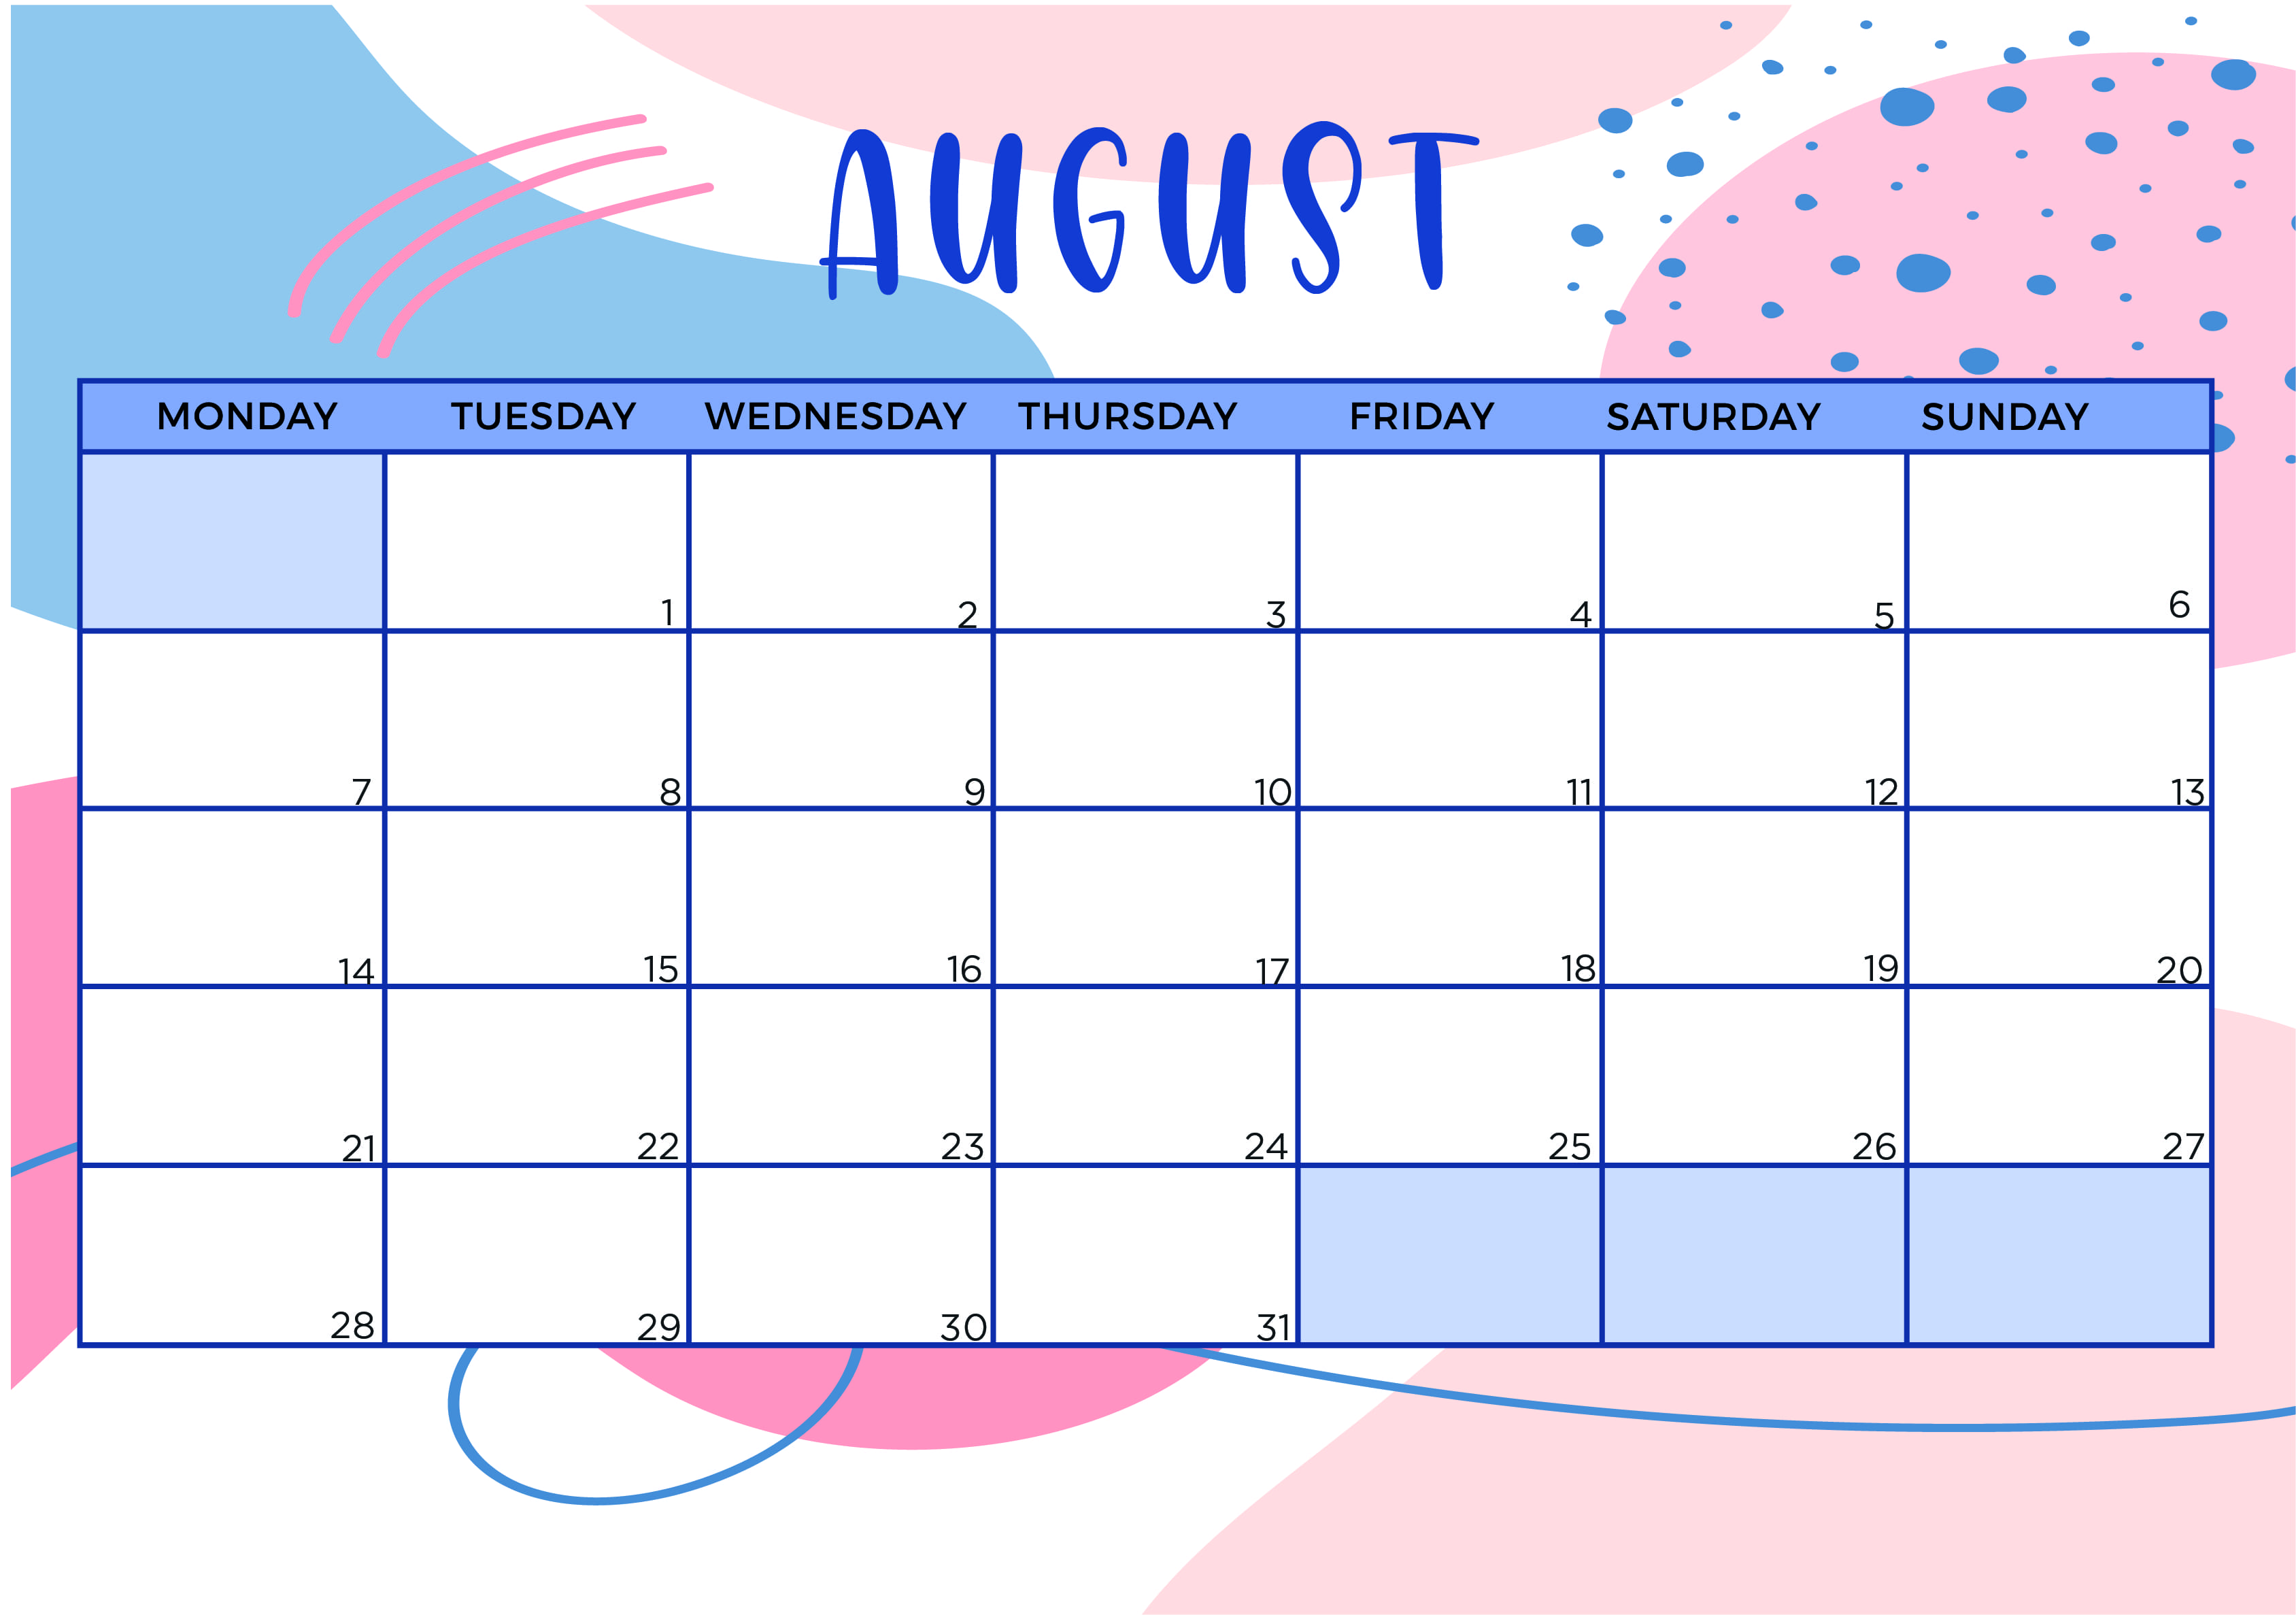 August 2023 Calendar Printable